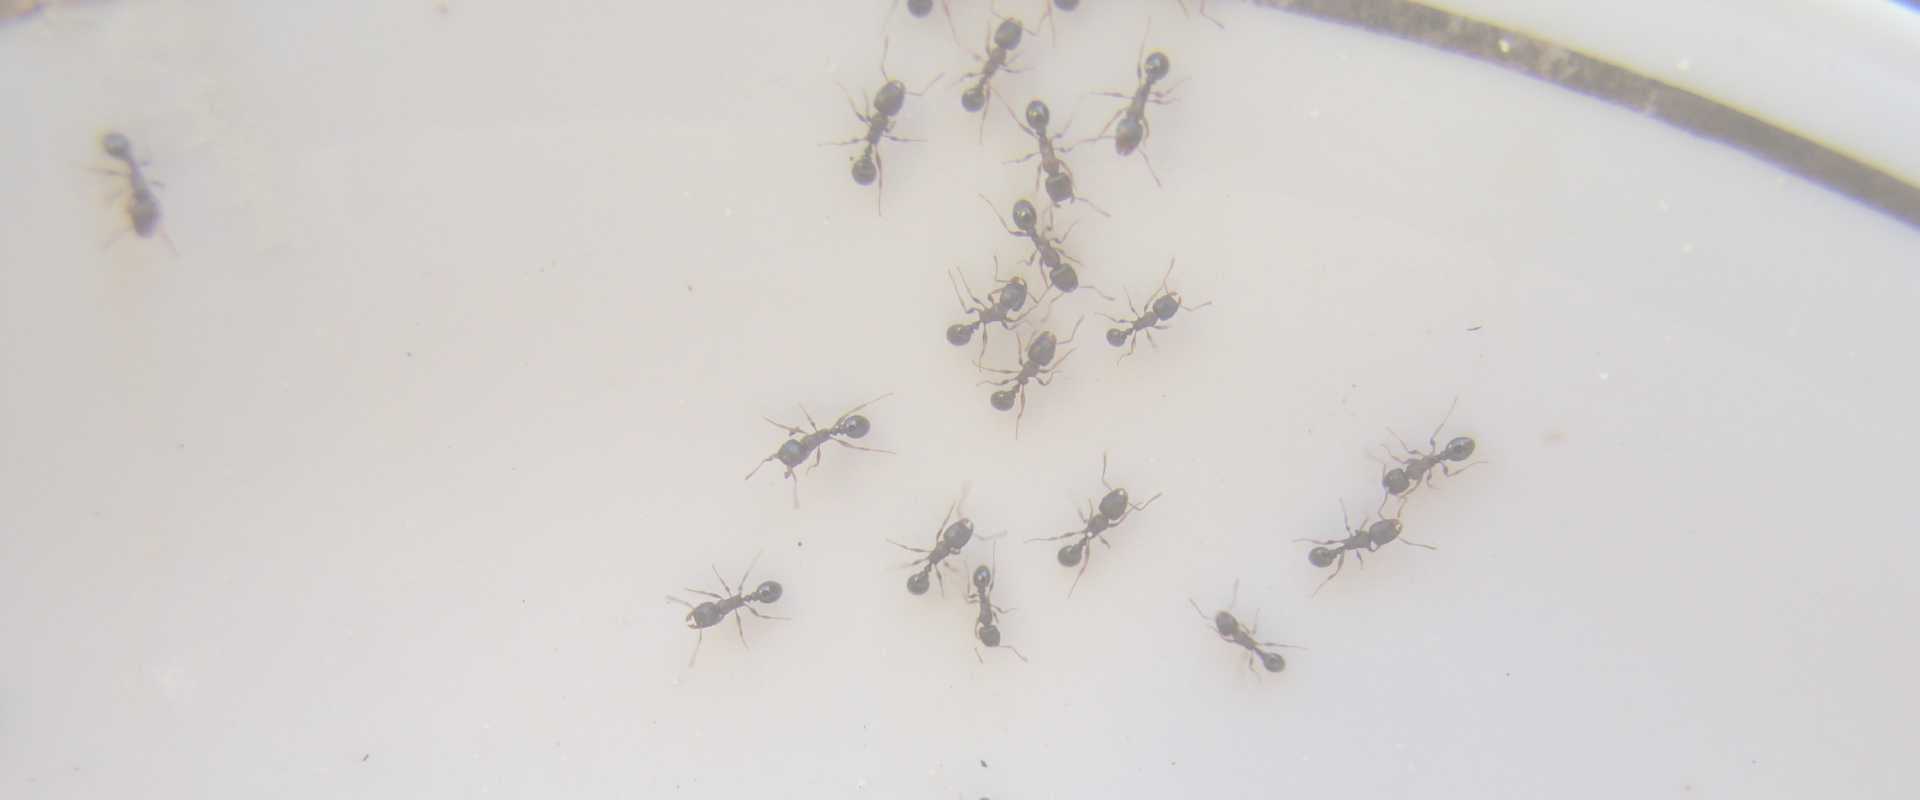 pest control in abingdon md